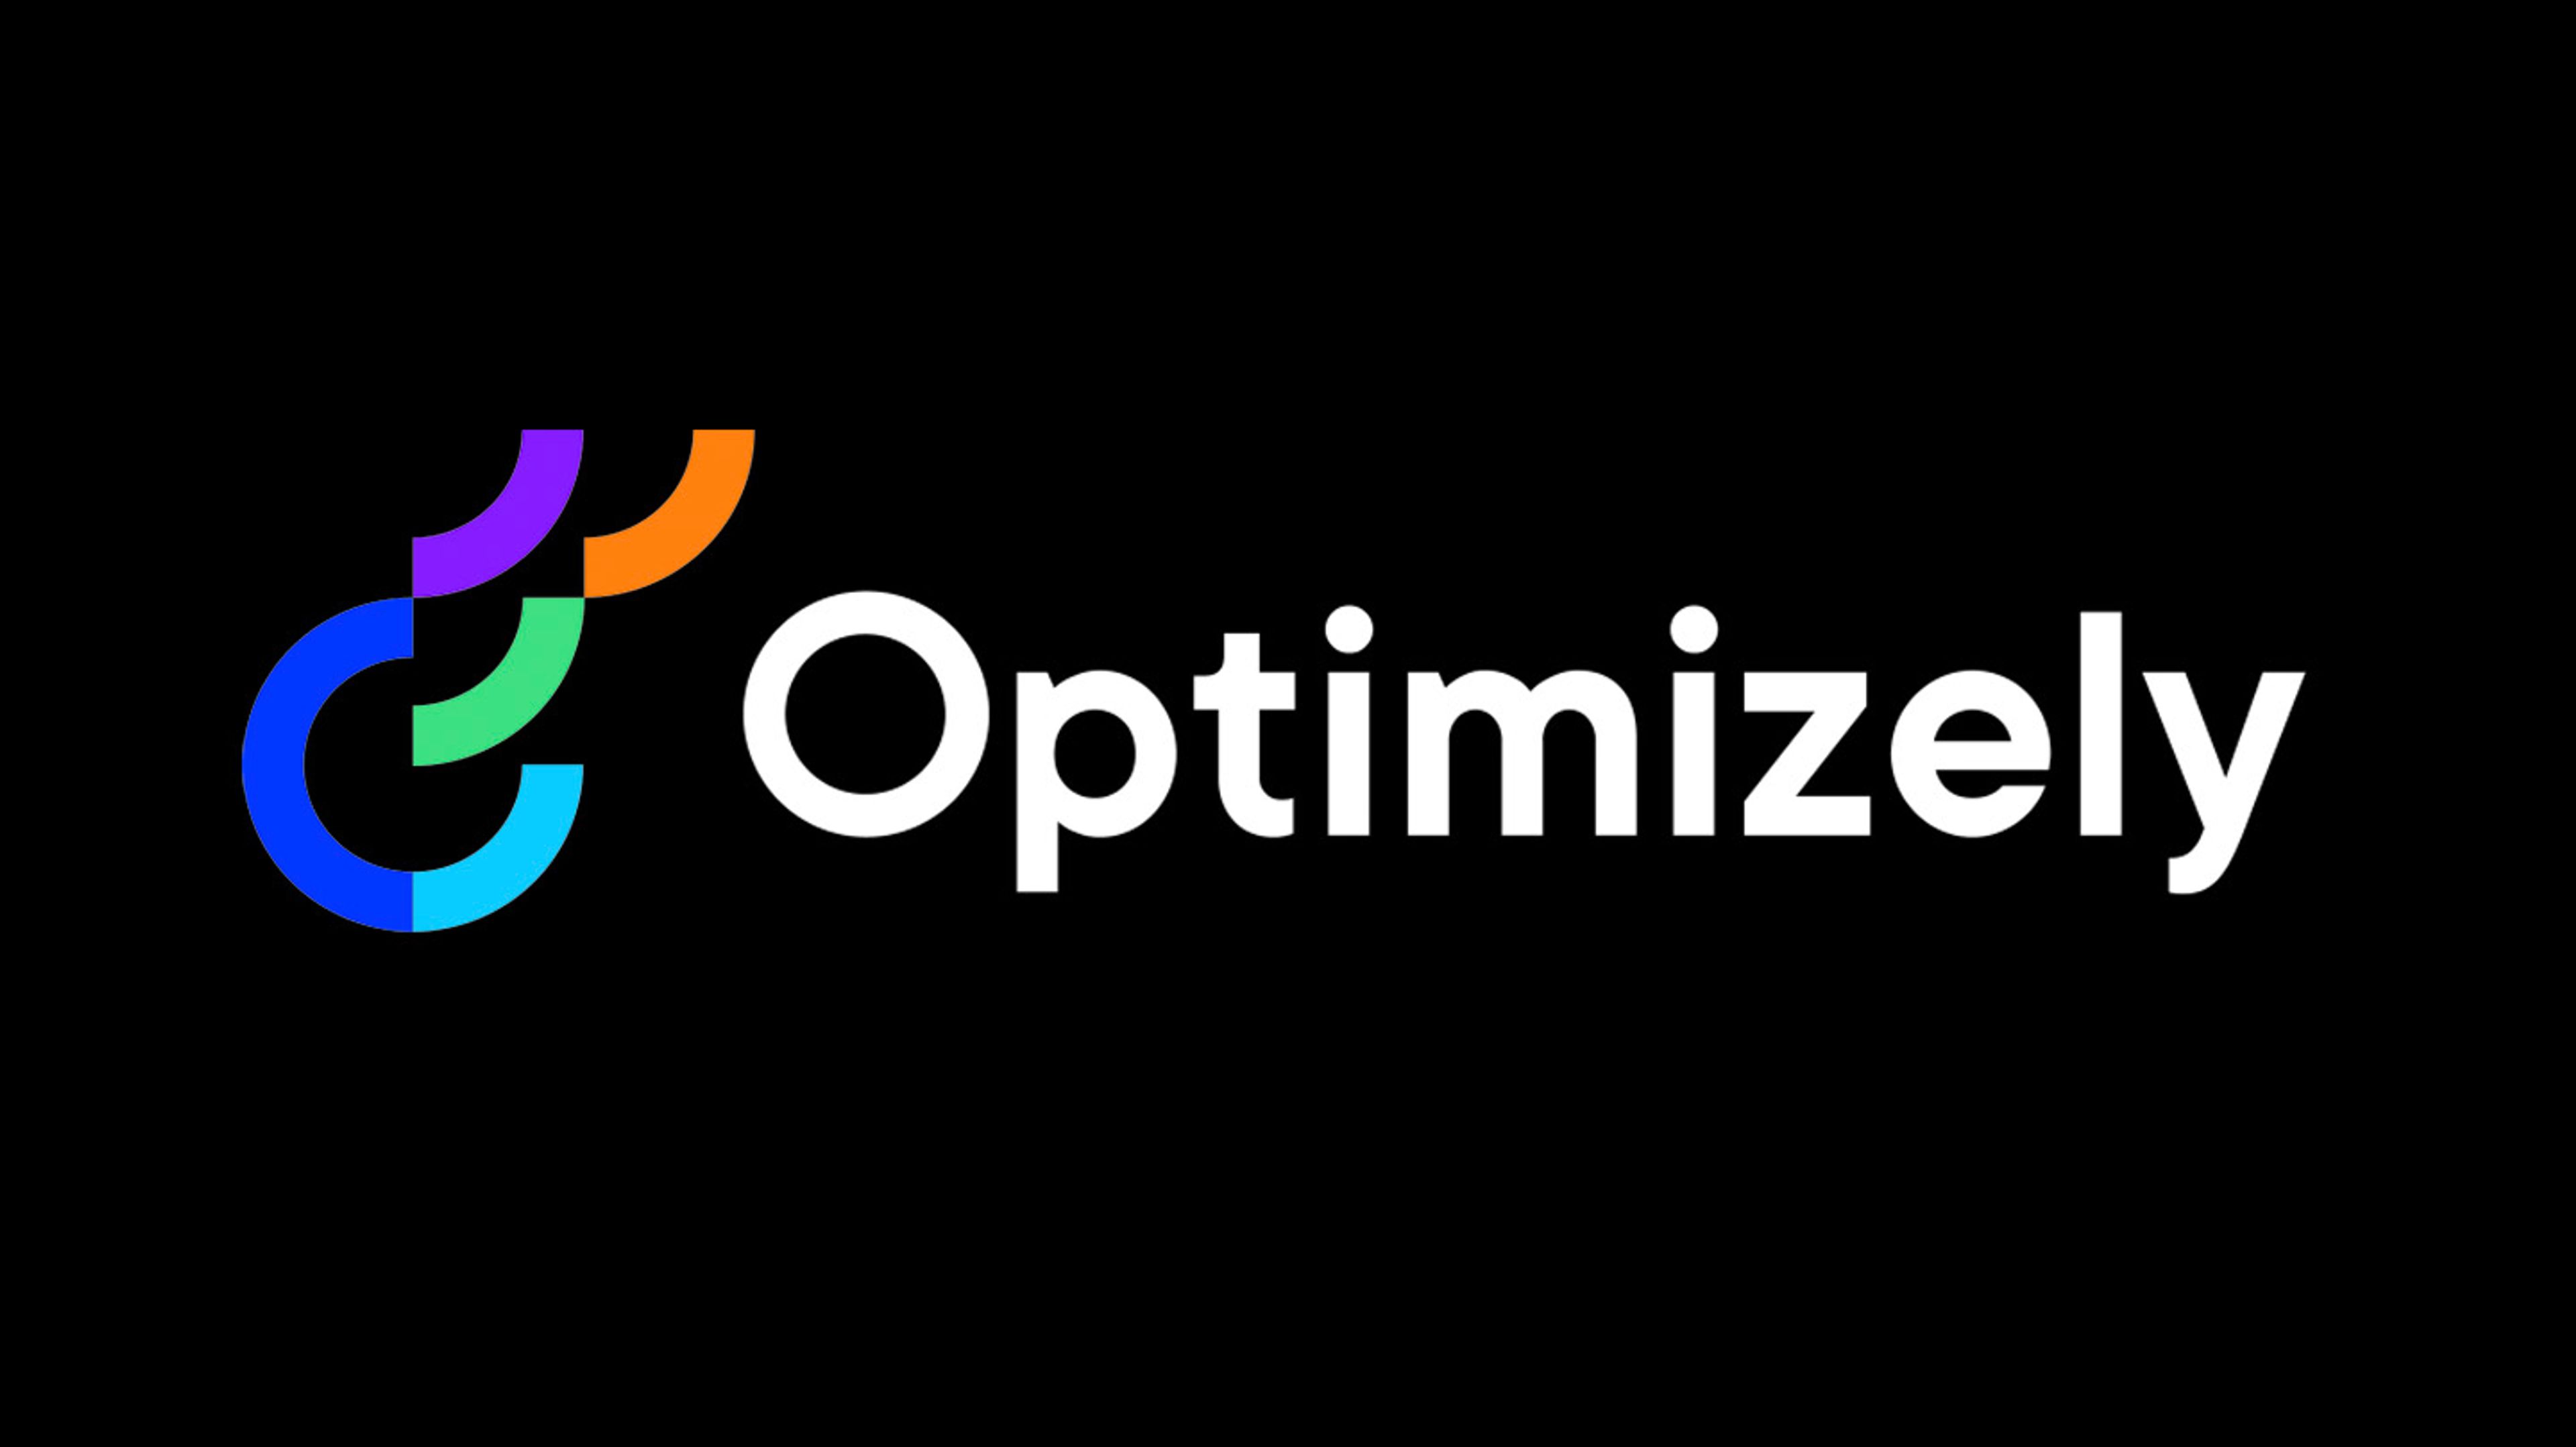 Optimizely logo against a black background